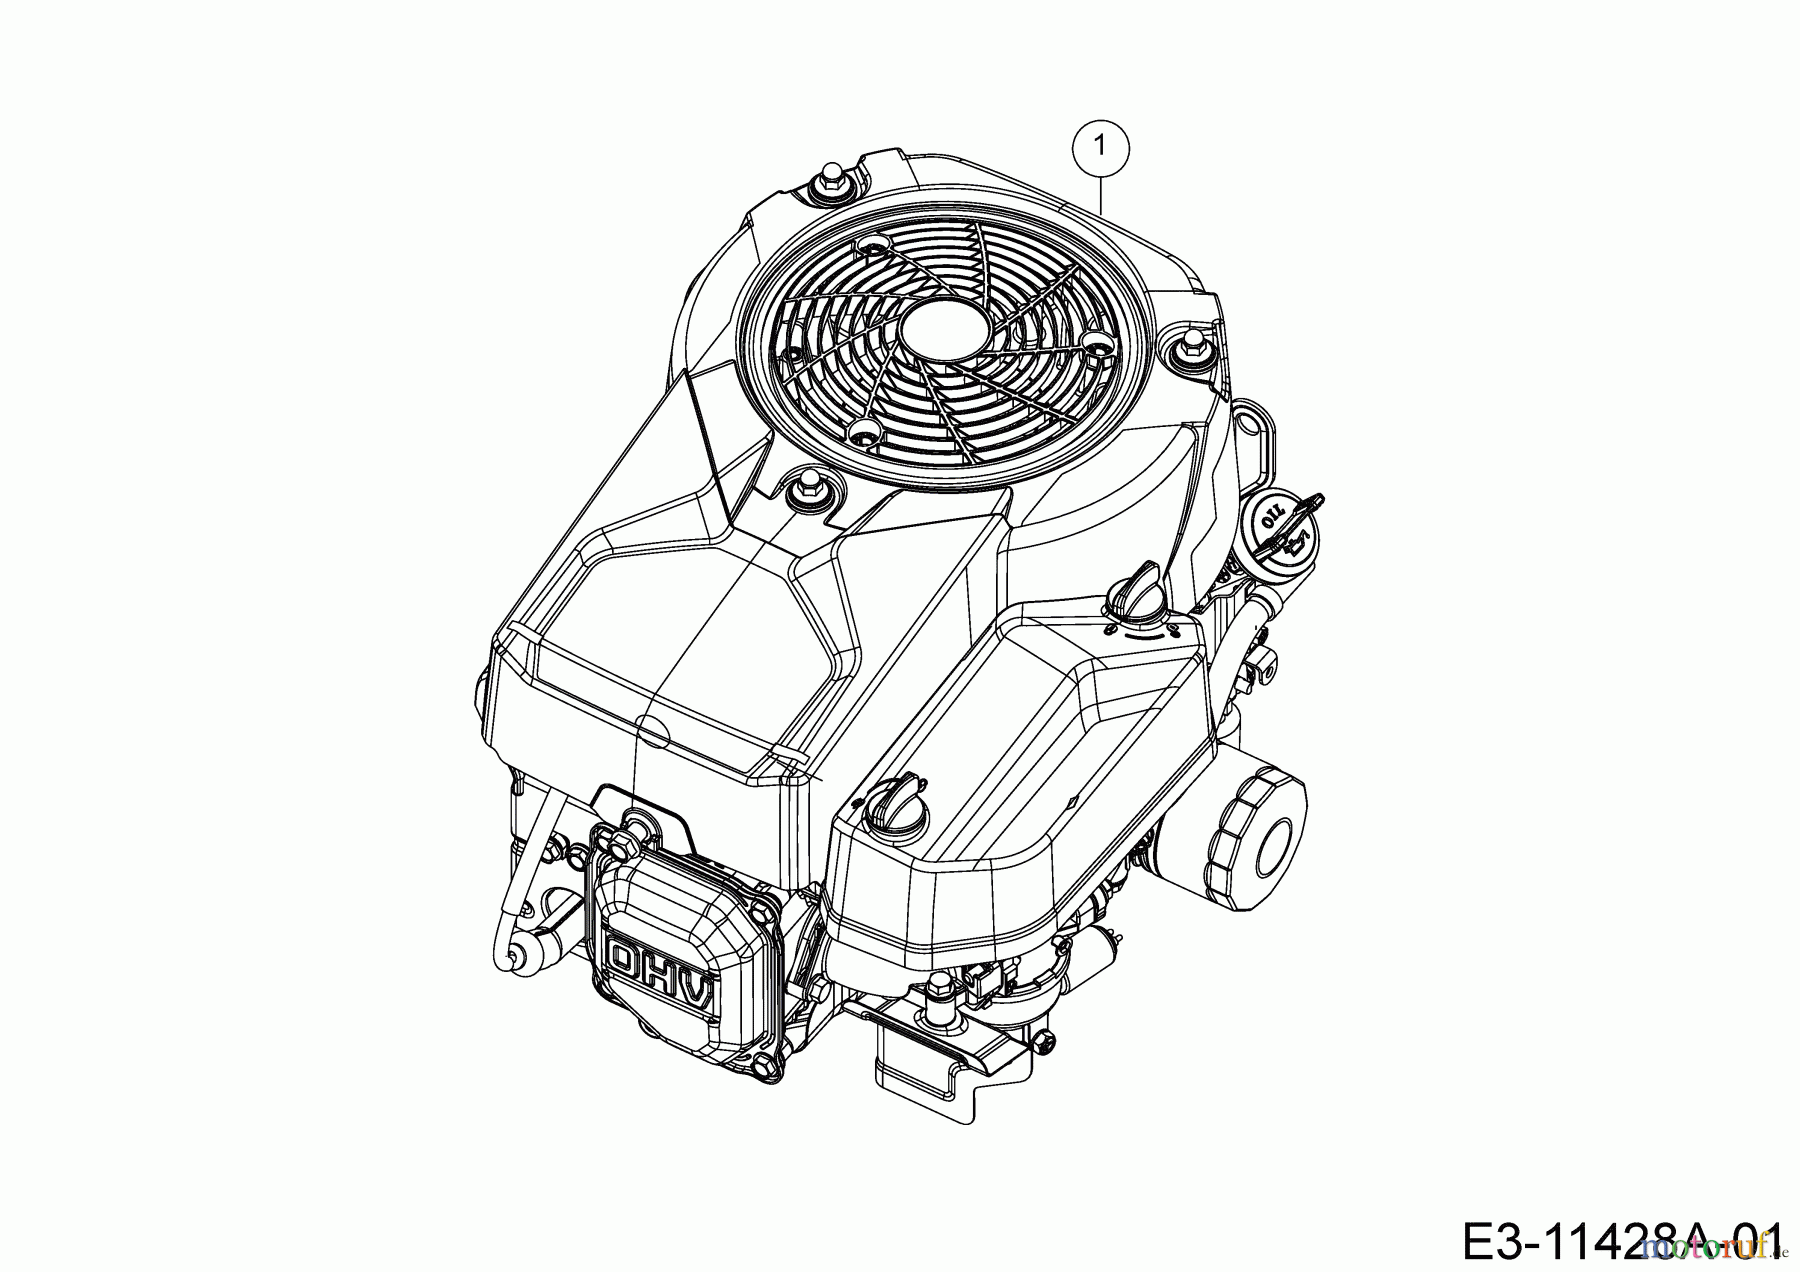  Lux Tools Lawn tractors B-RT-165/92 13JN77SE694  (2020) Engine